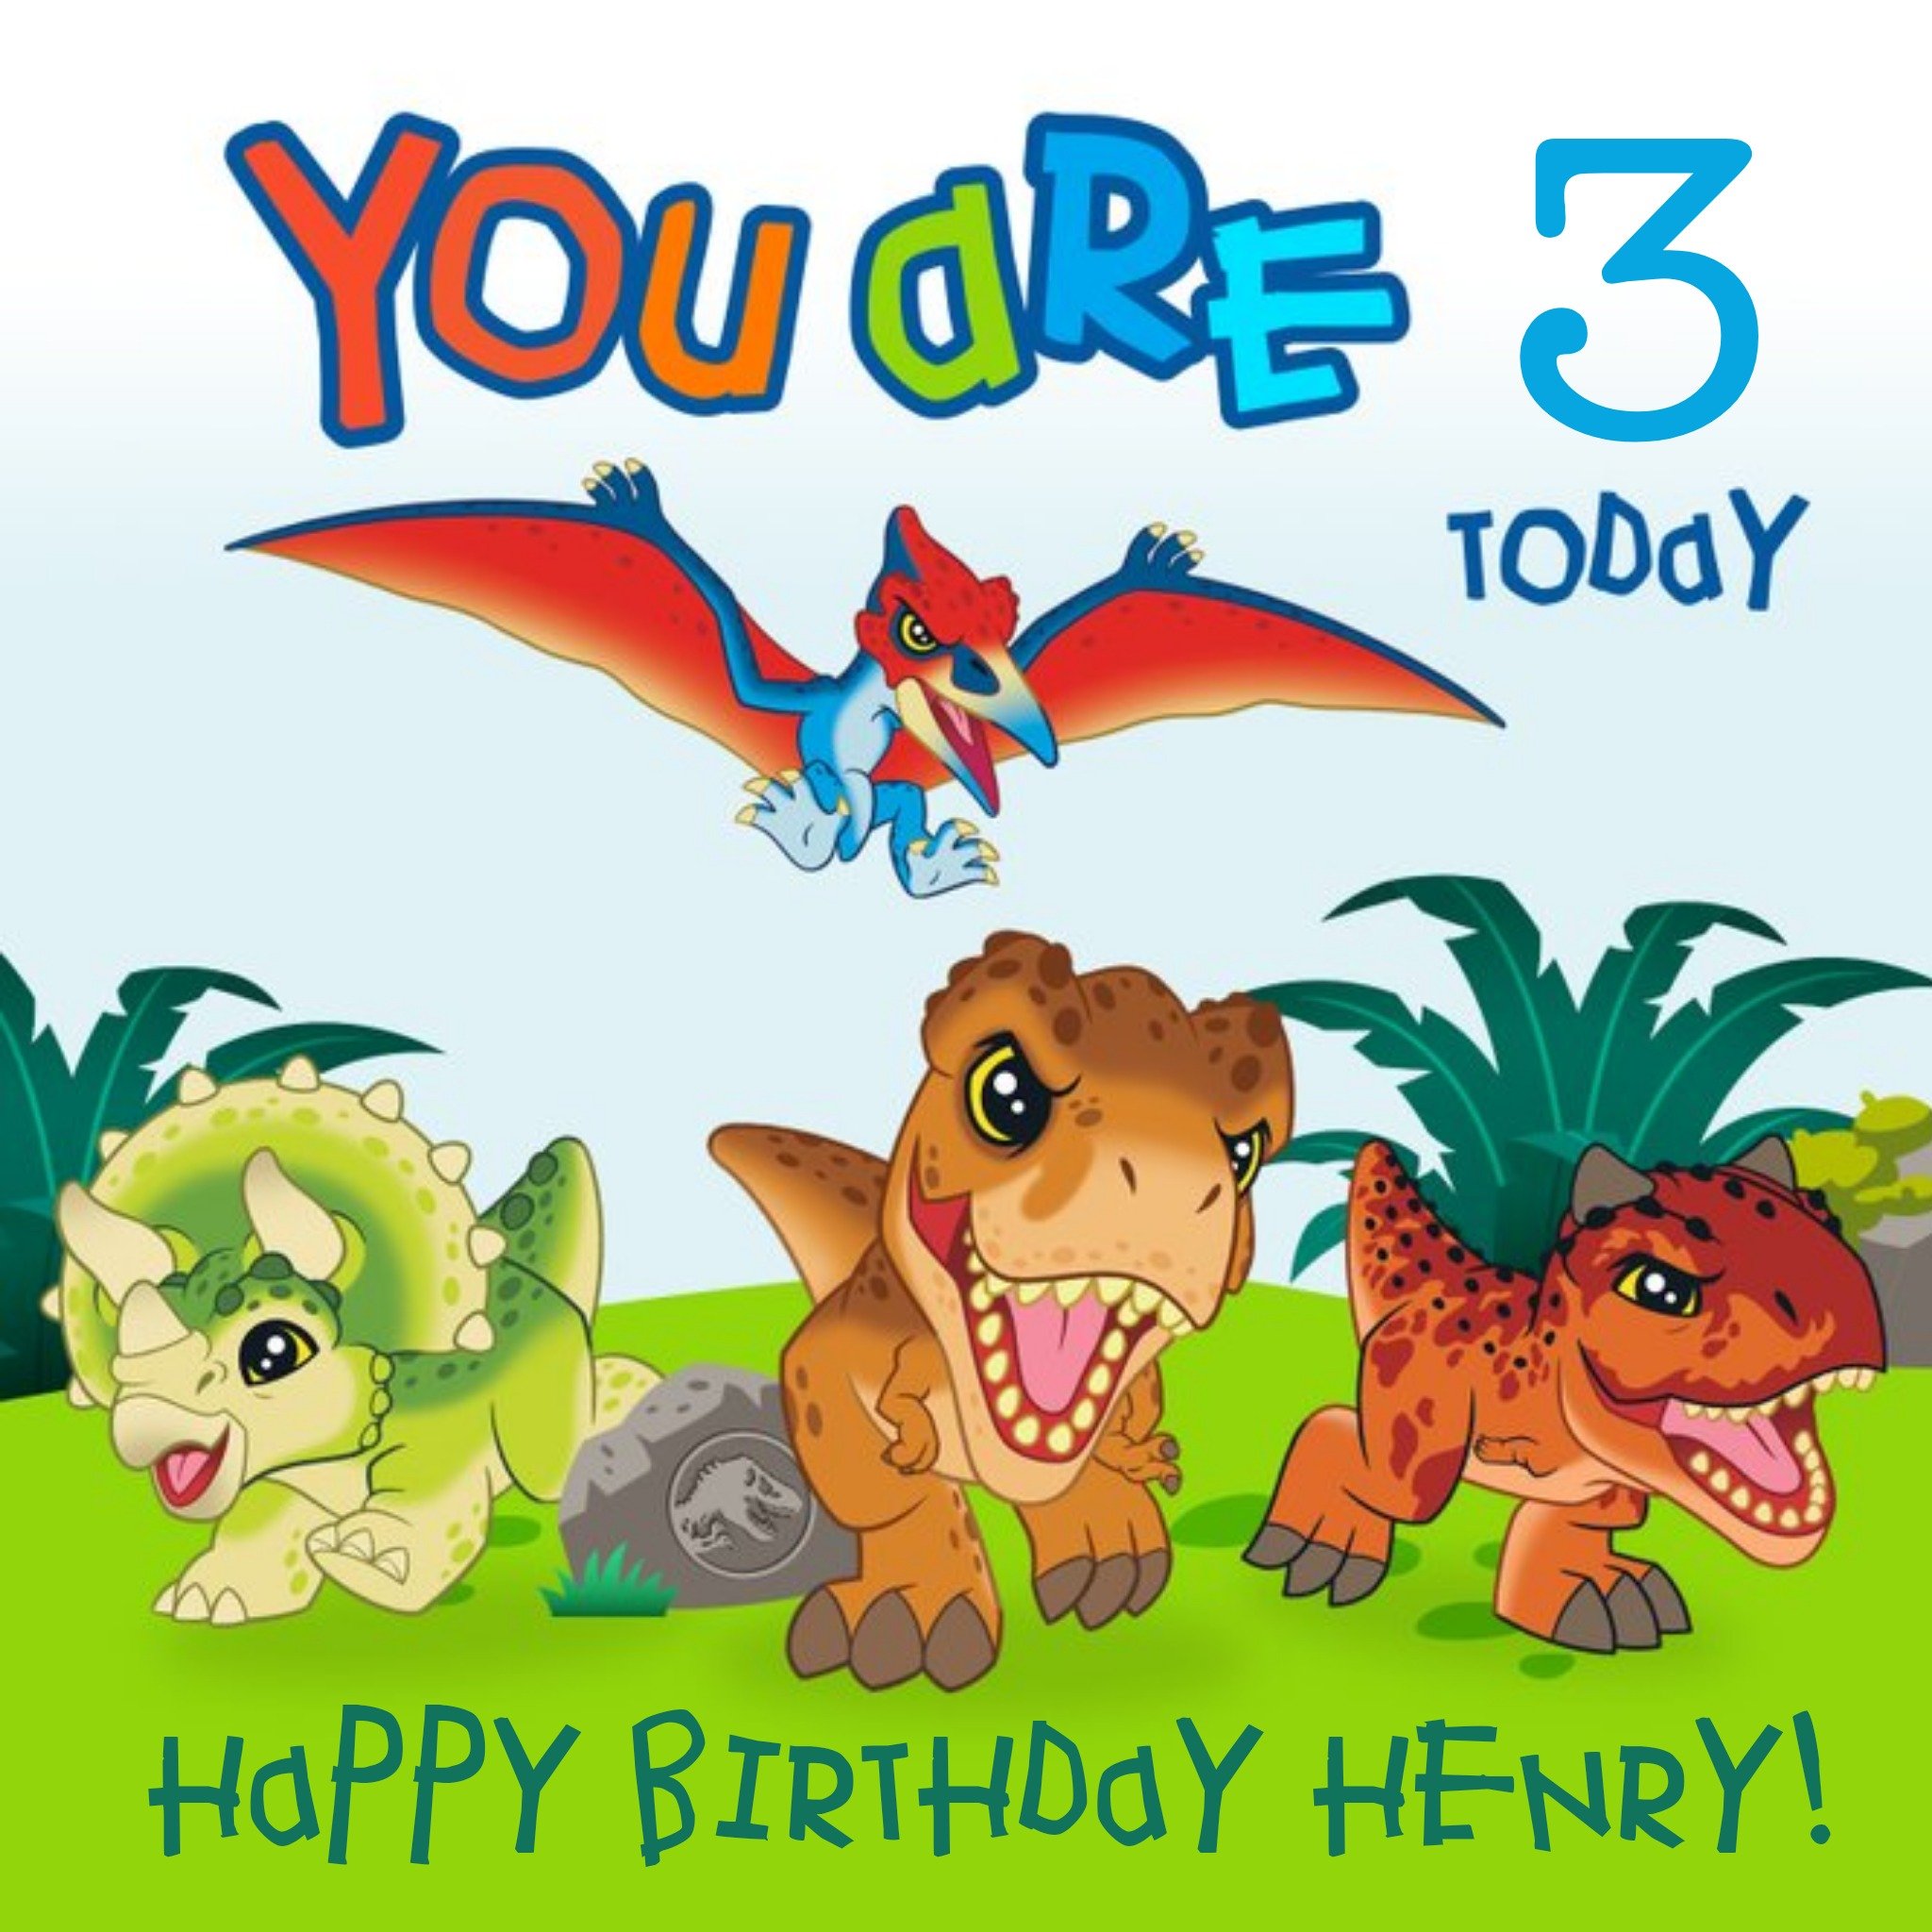 Jurassic Park Cute Cartoon Dinosaurs 3 Today Birthday Card, Square